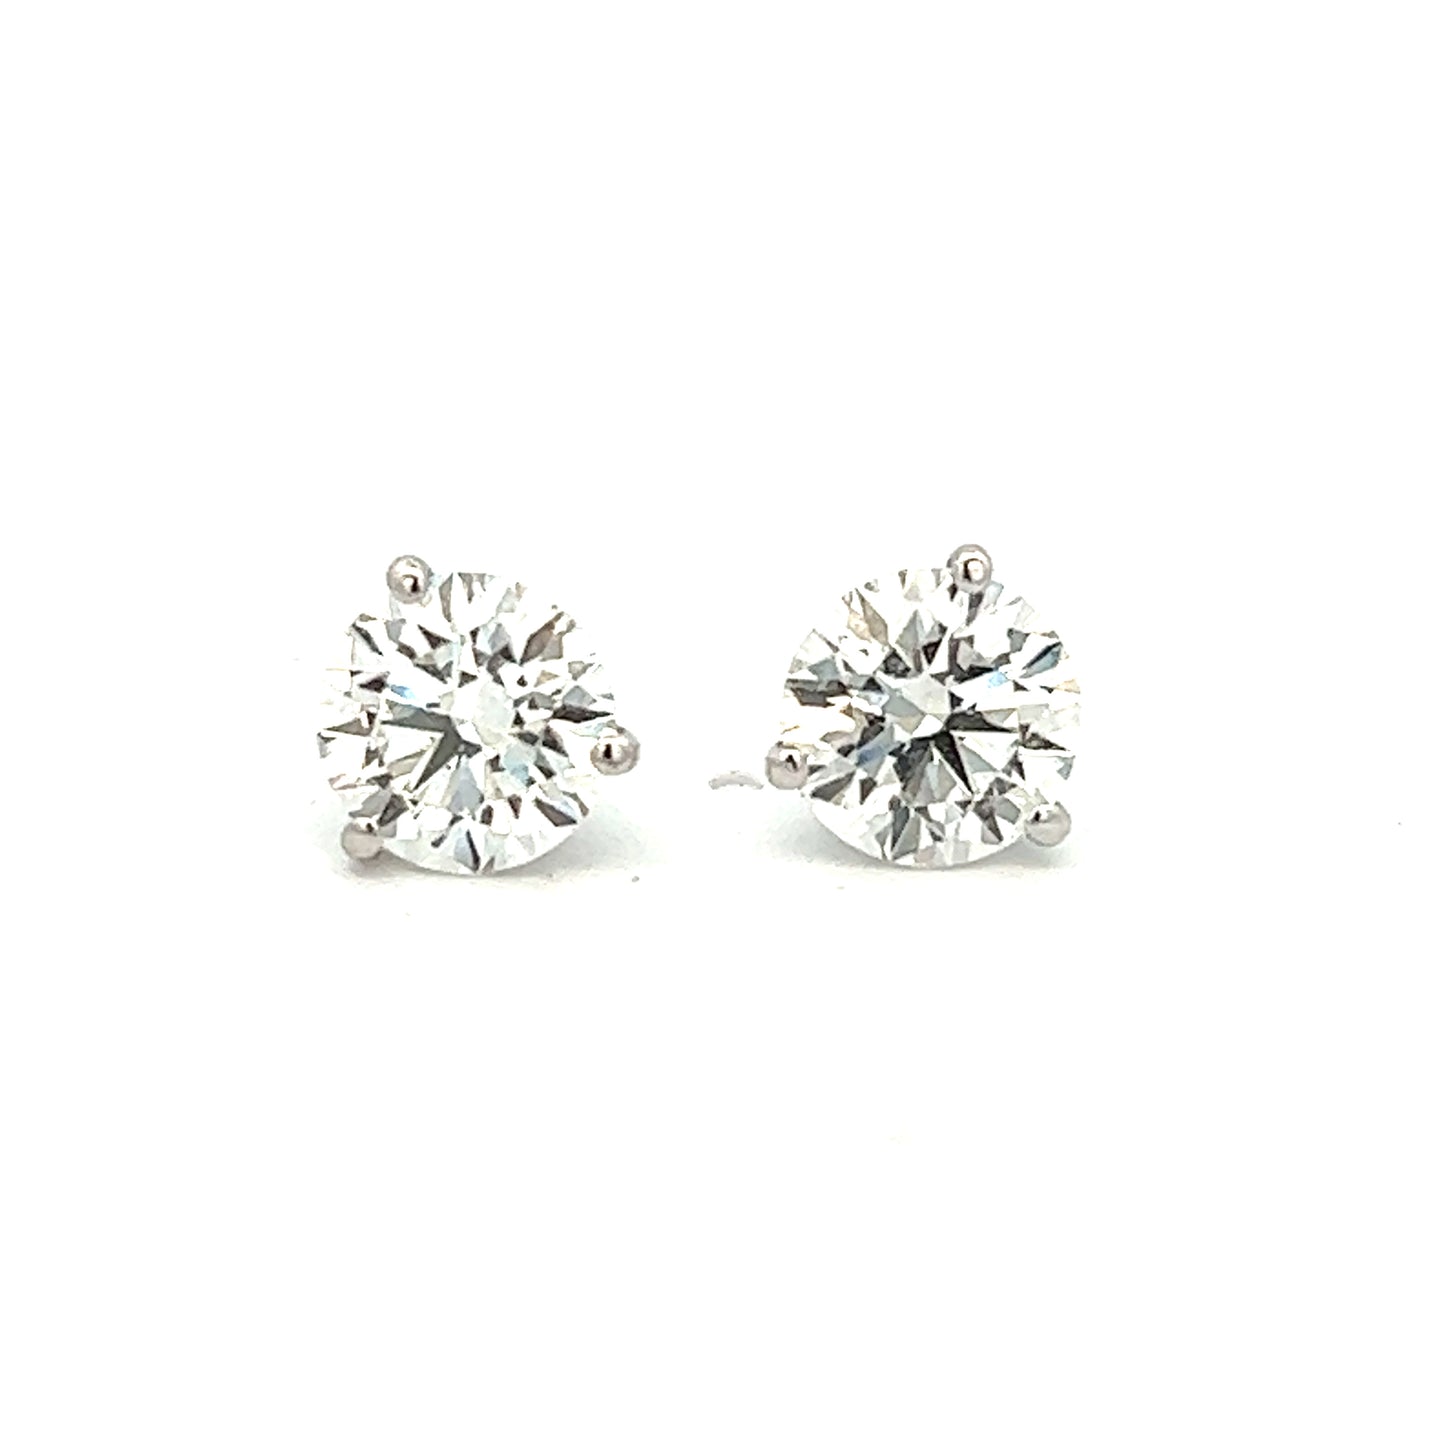 4 Carat Diamond Stud Earrings | IGI Certified Diamonds